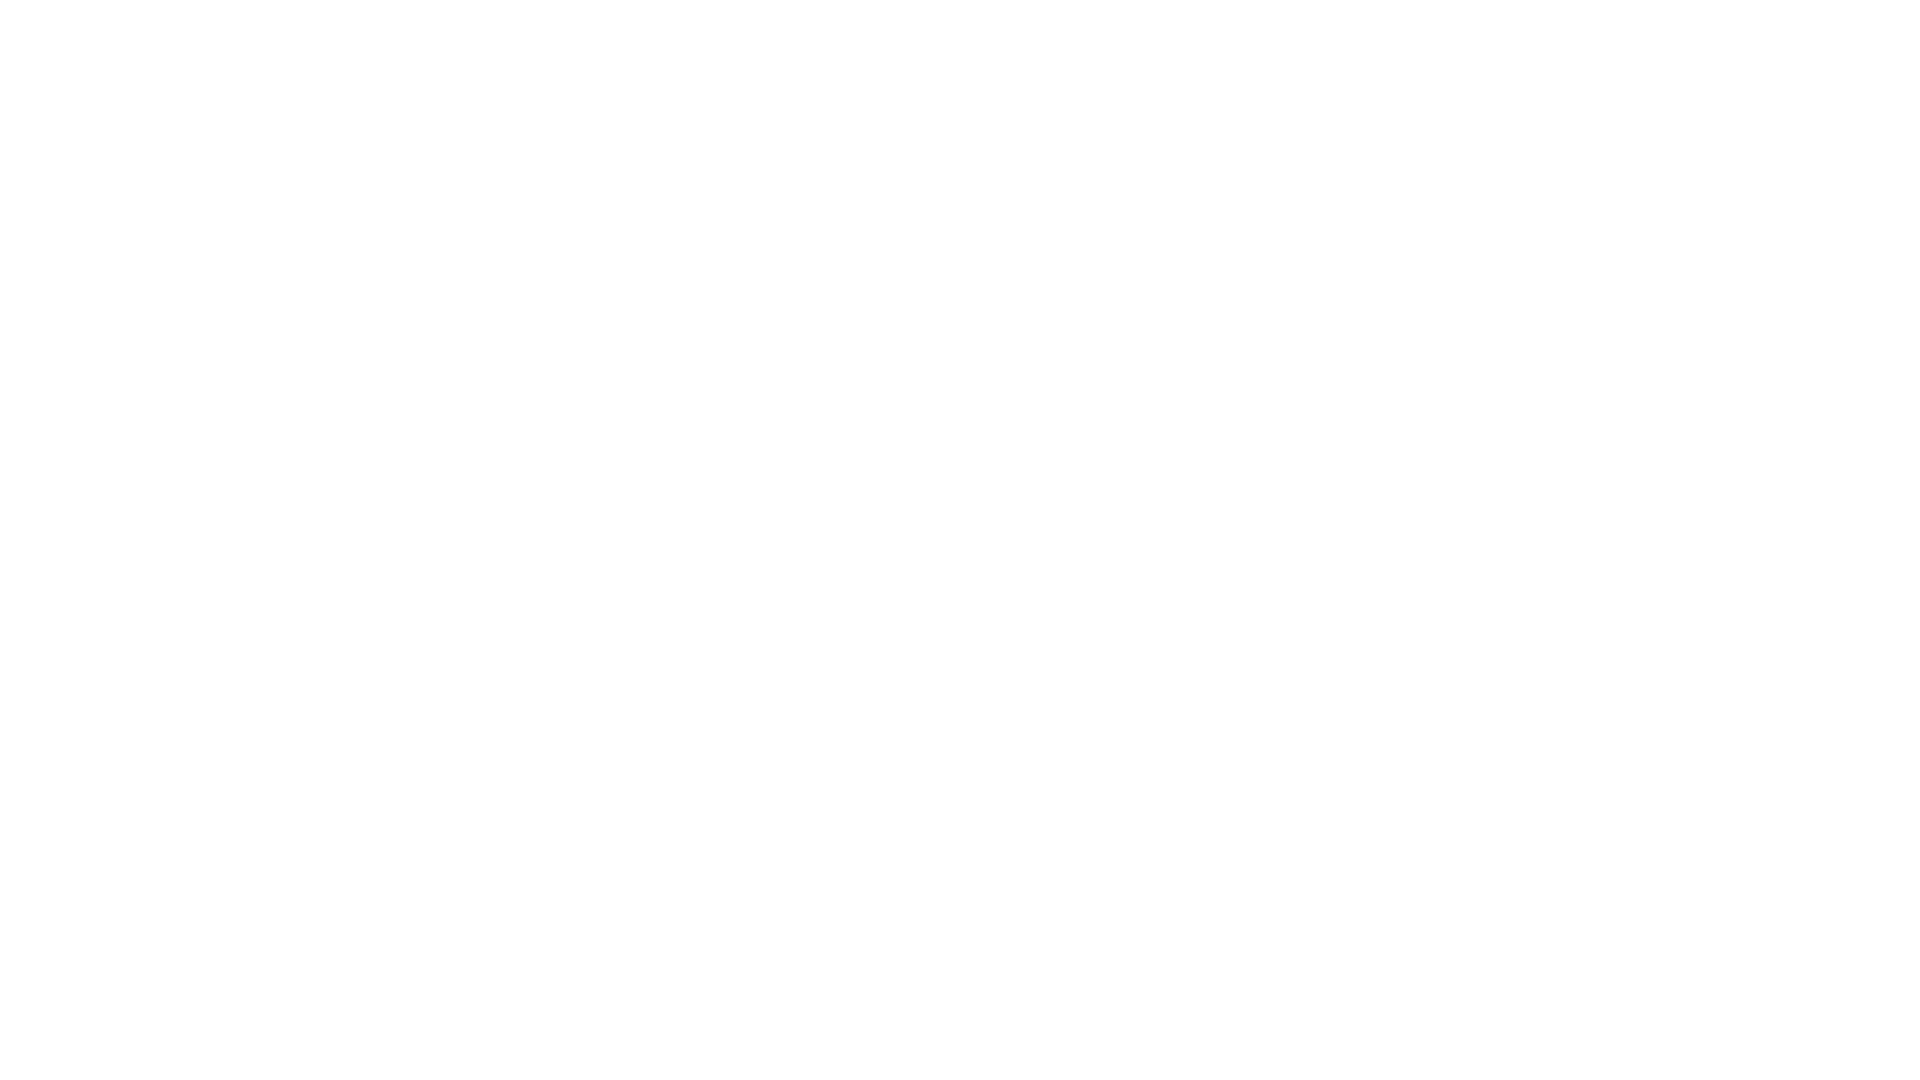 Alexanderwerk Logo